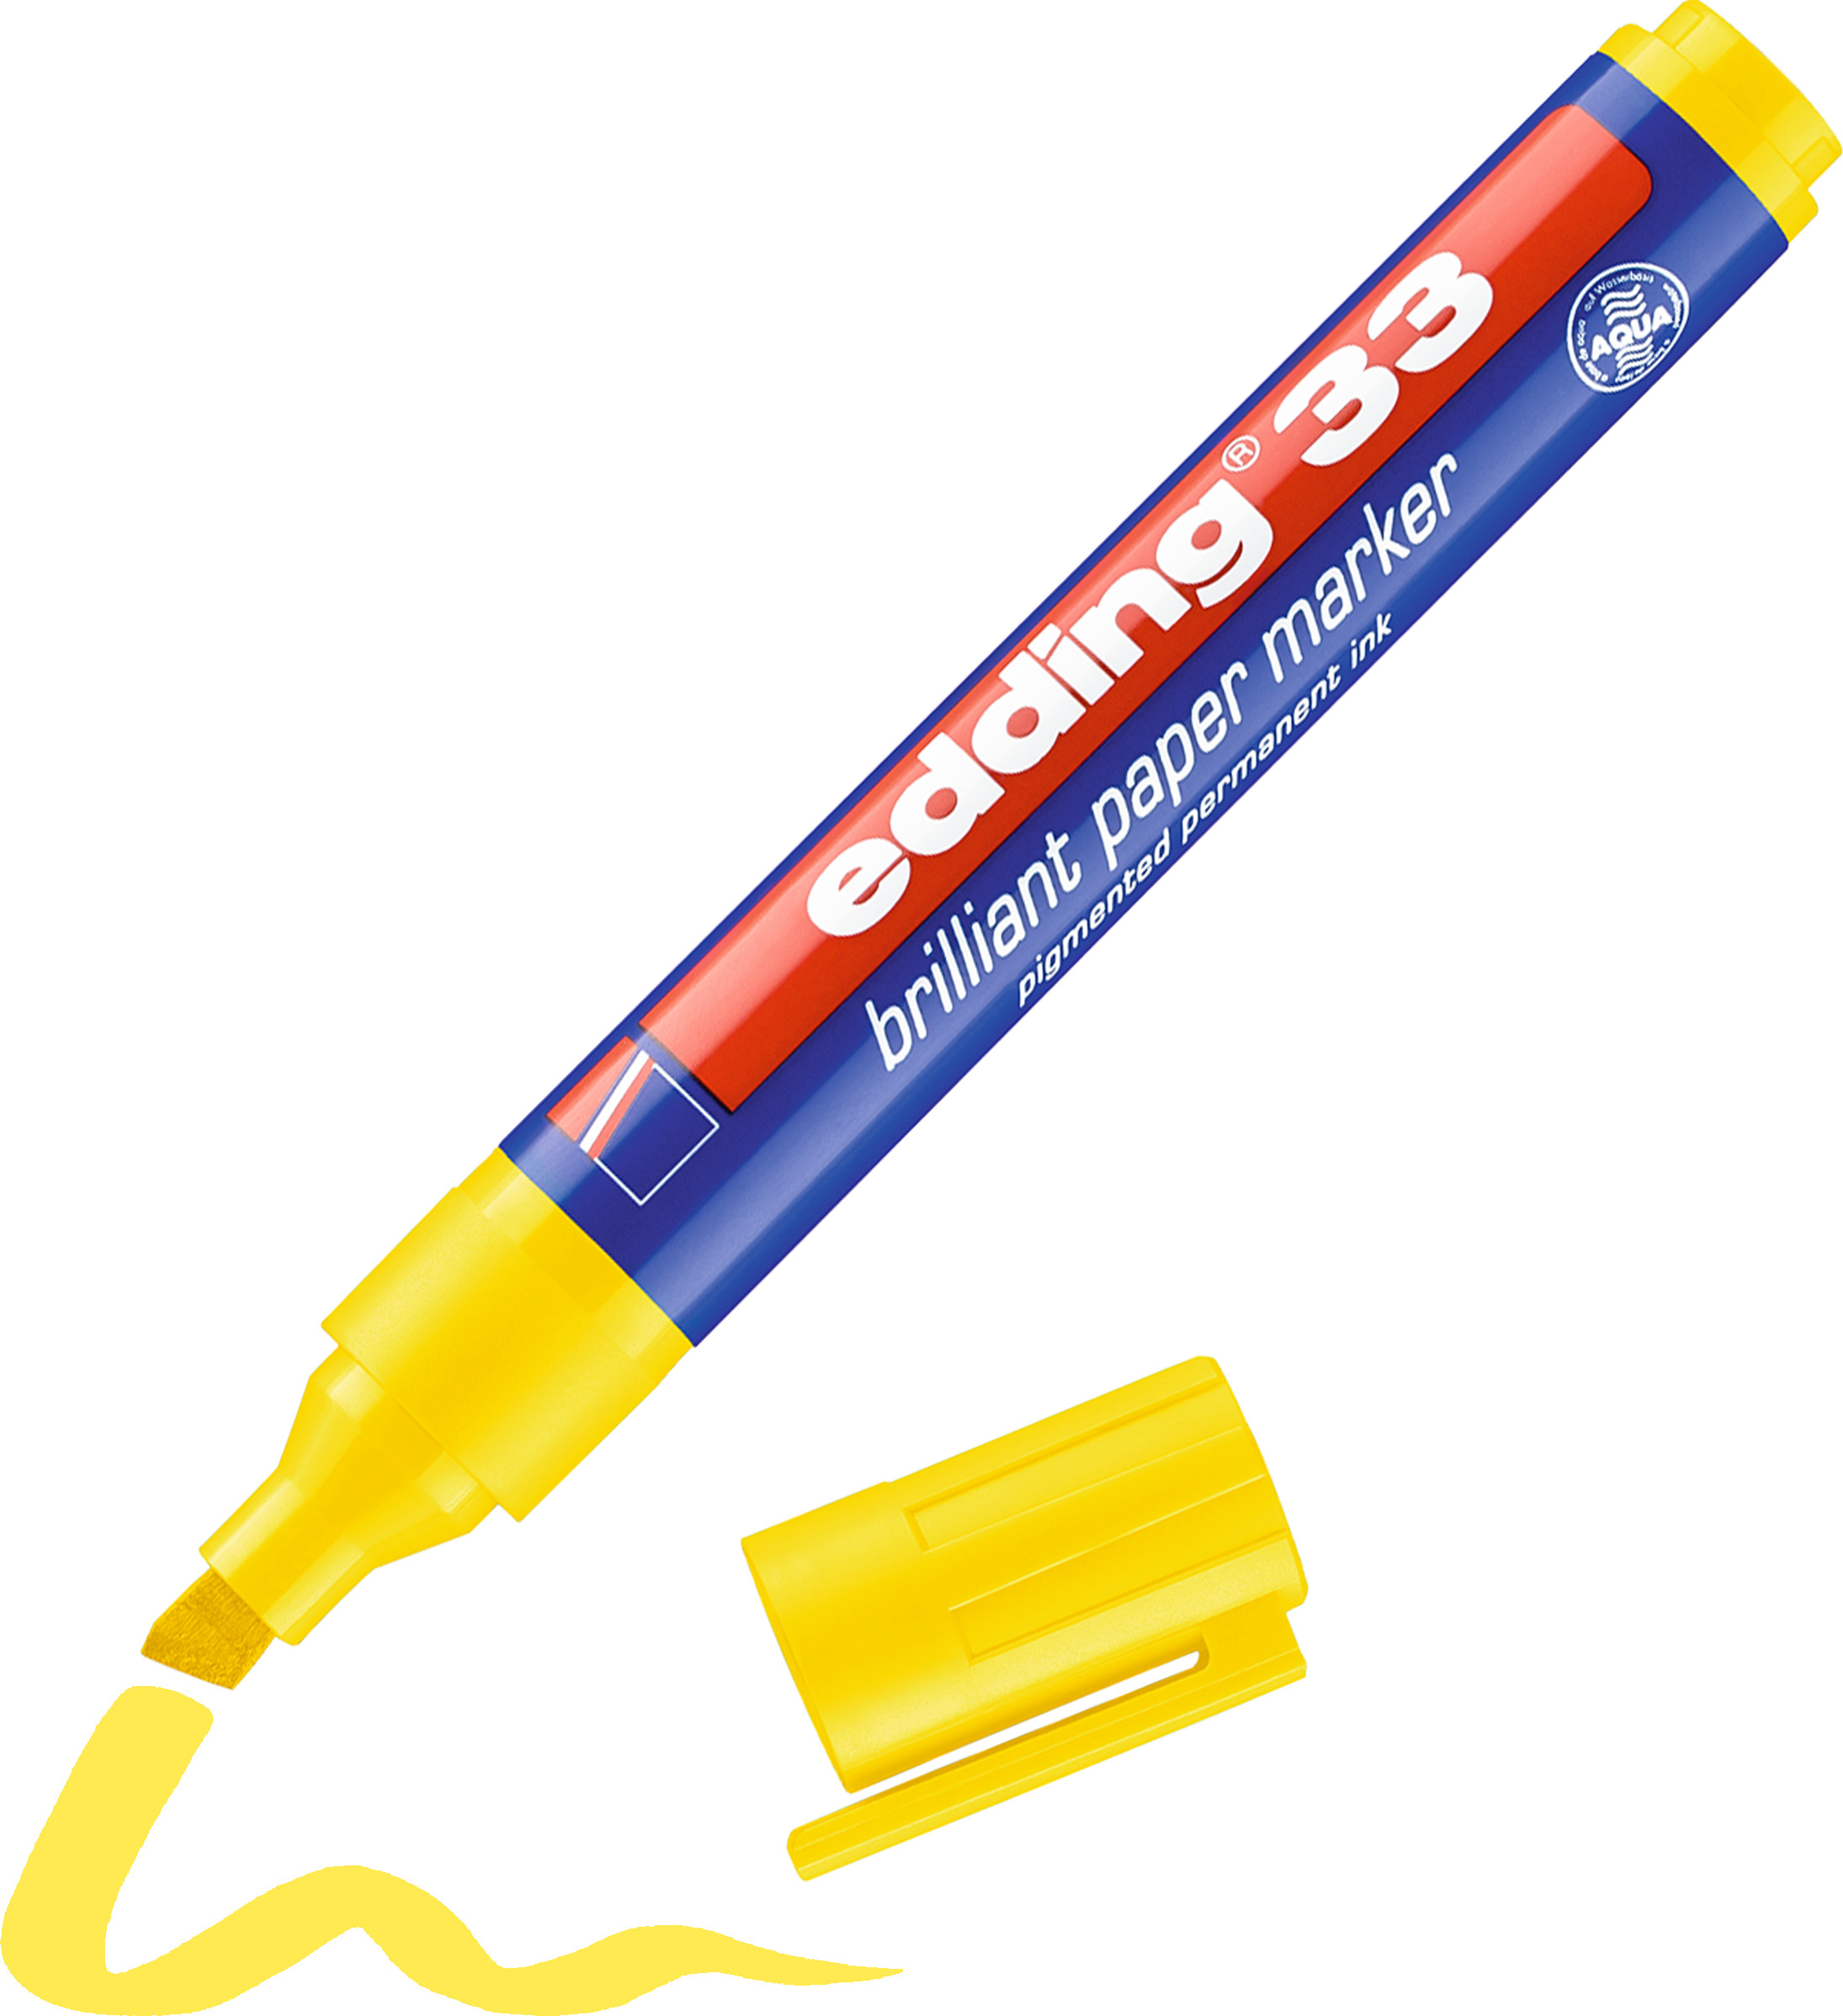 EDDING Permanent Marker 33 1-5mm 33-5 jaune